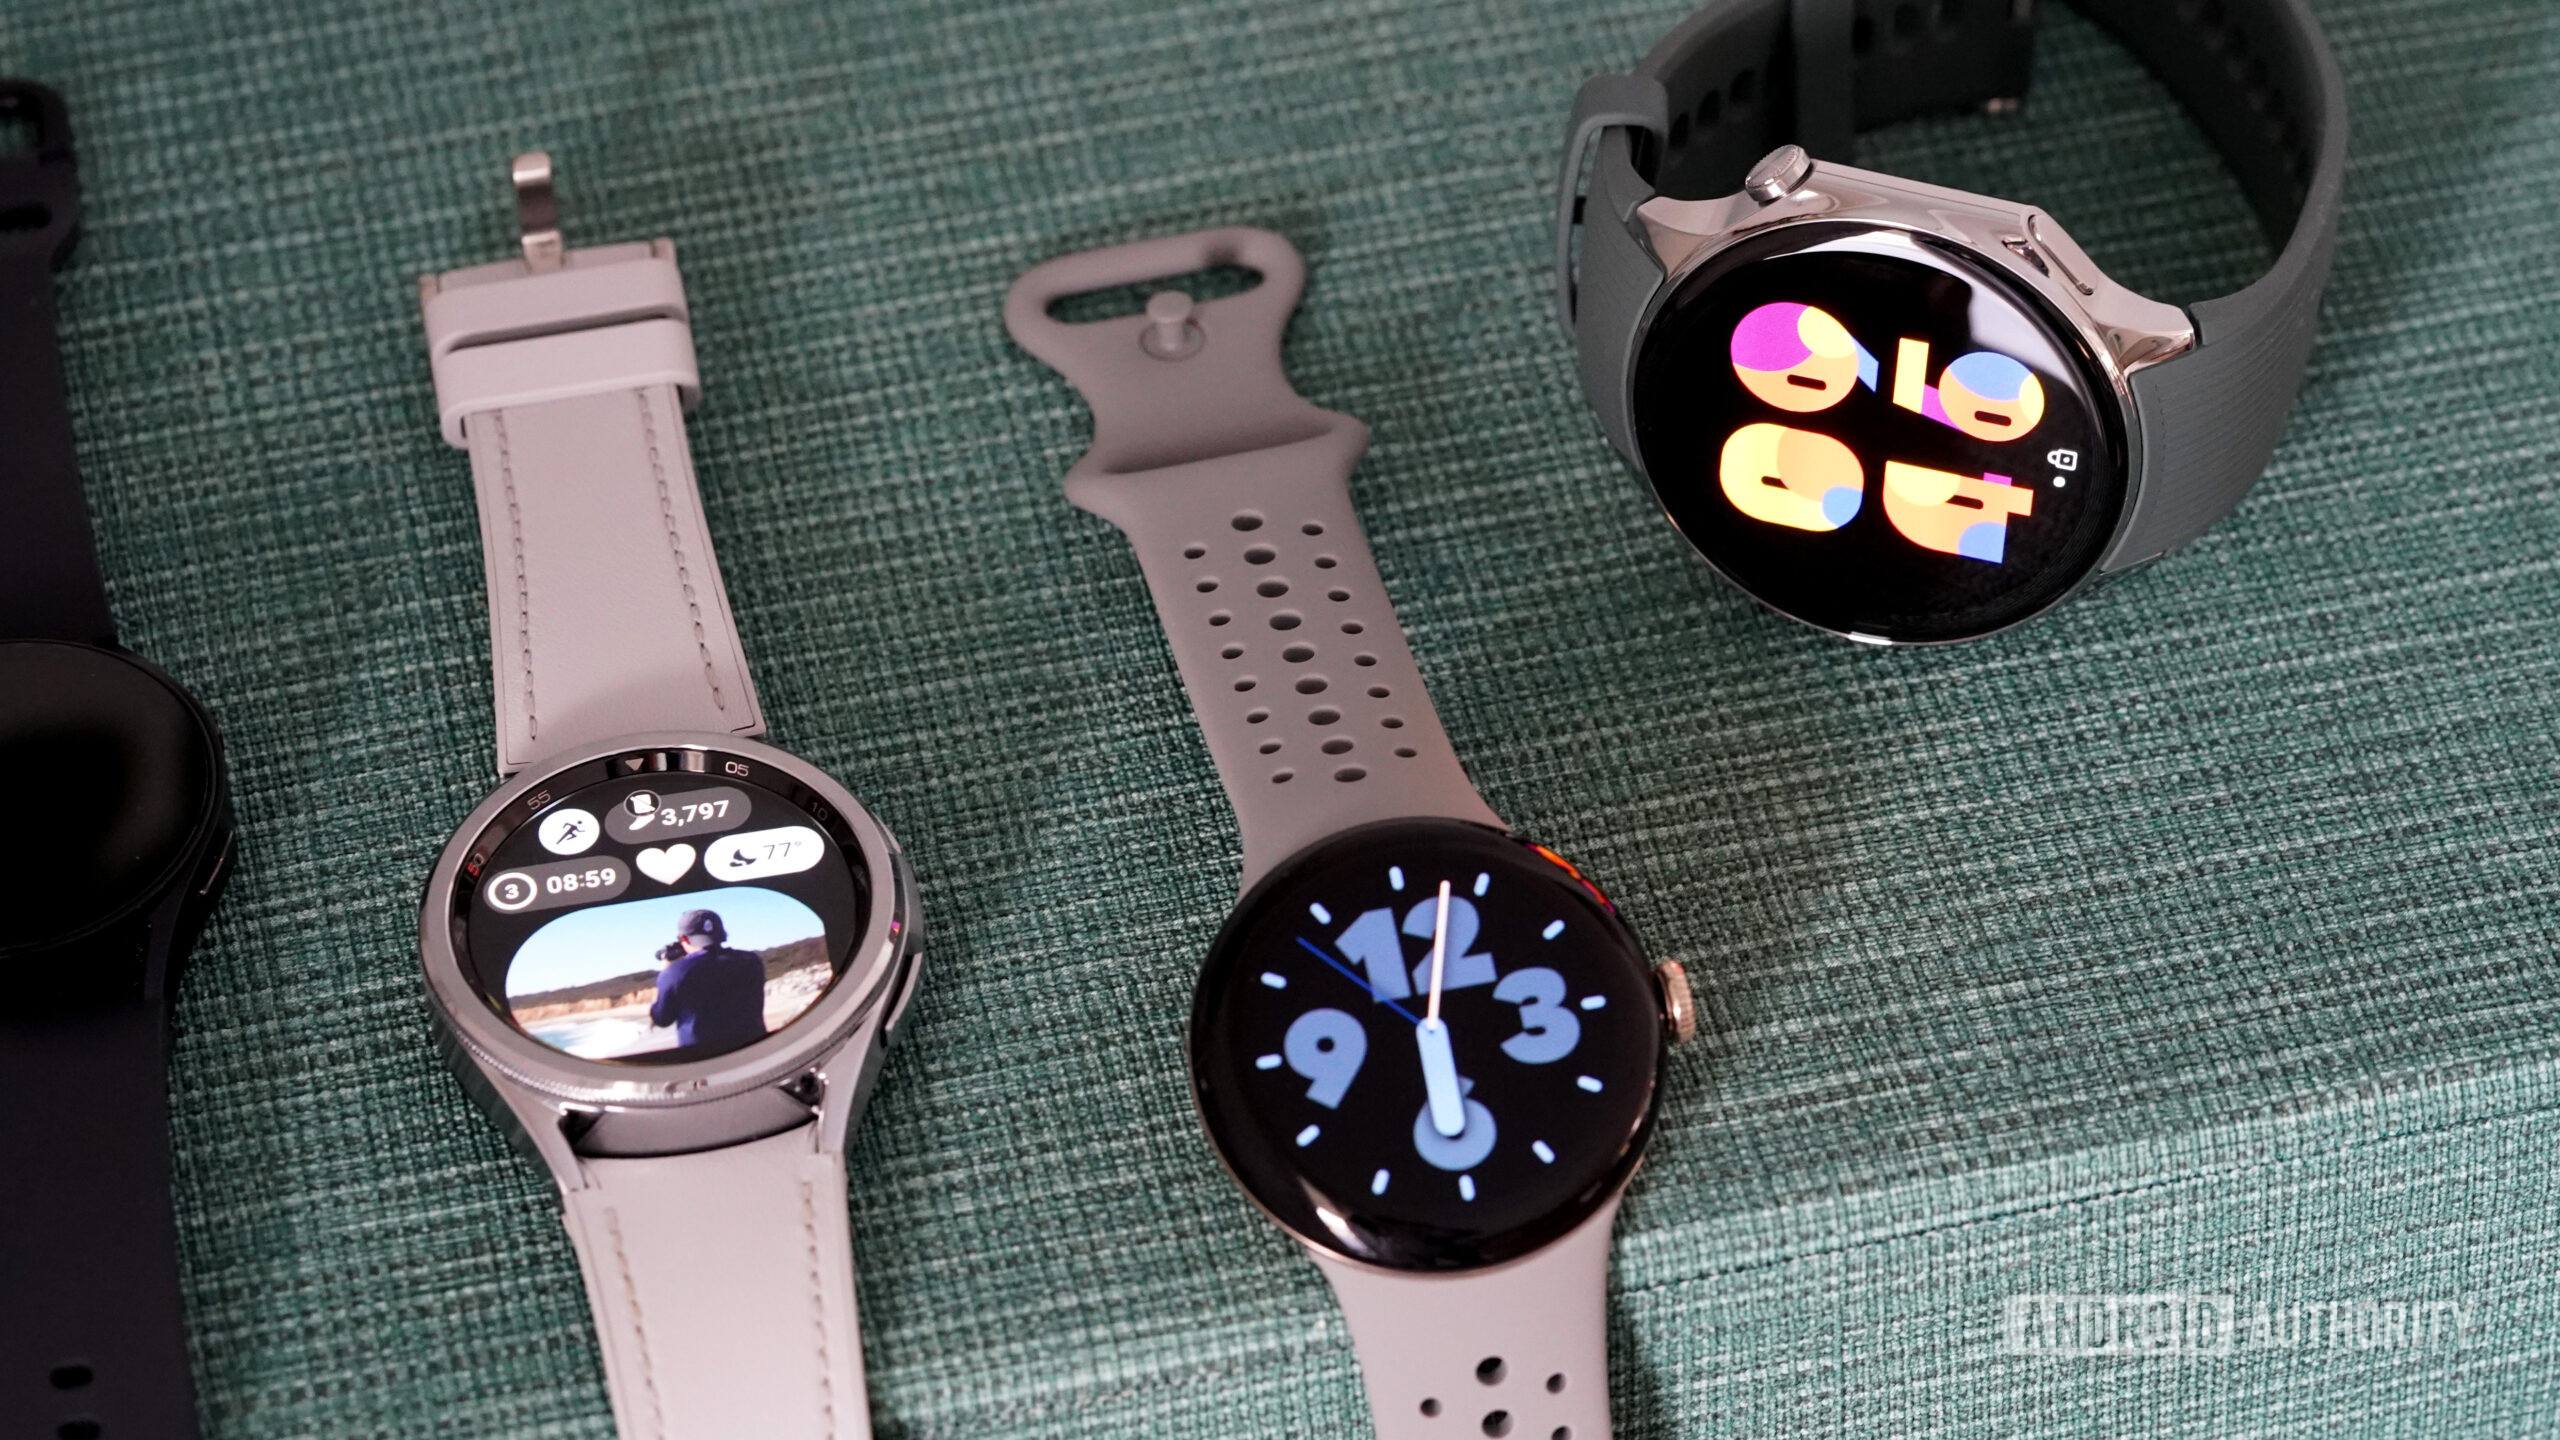 A OnePlus Watch 2 rests alongside alternative Wear OS devices.